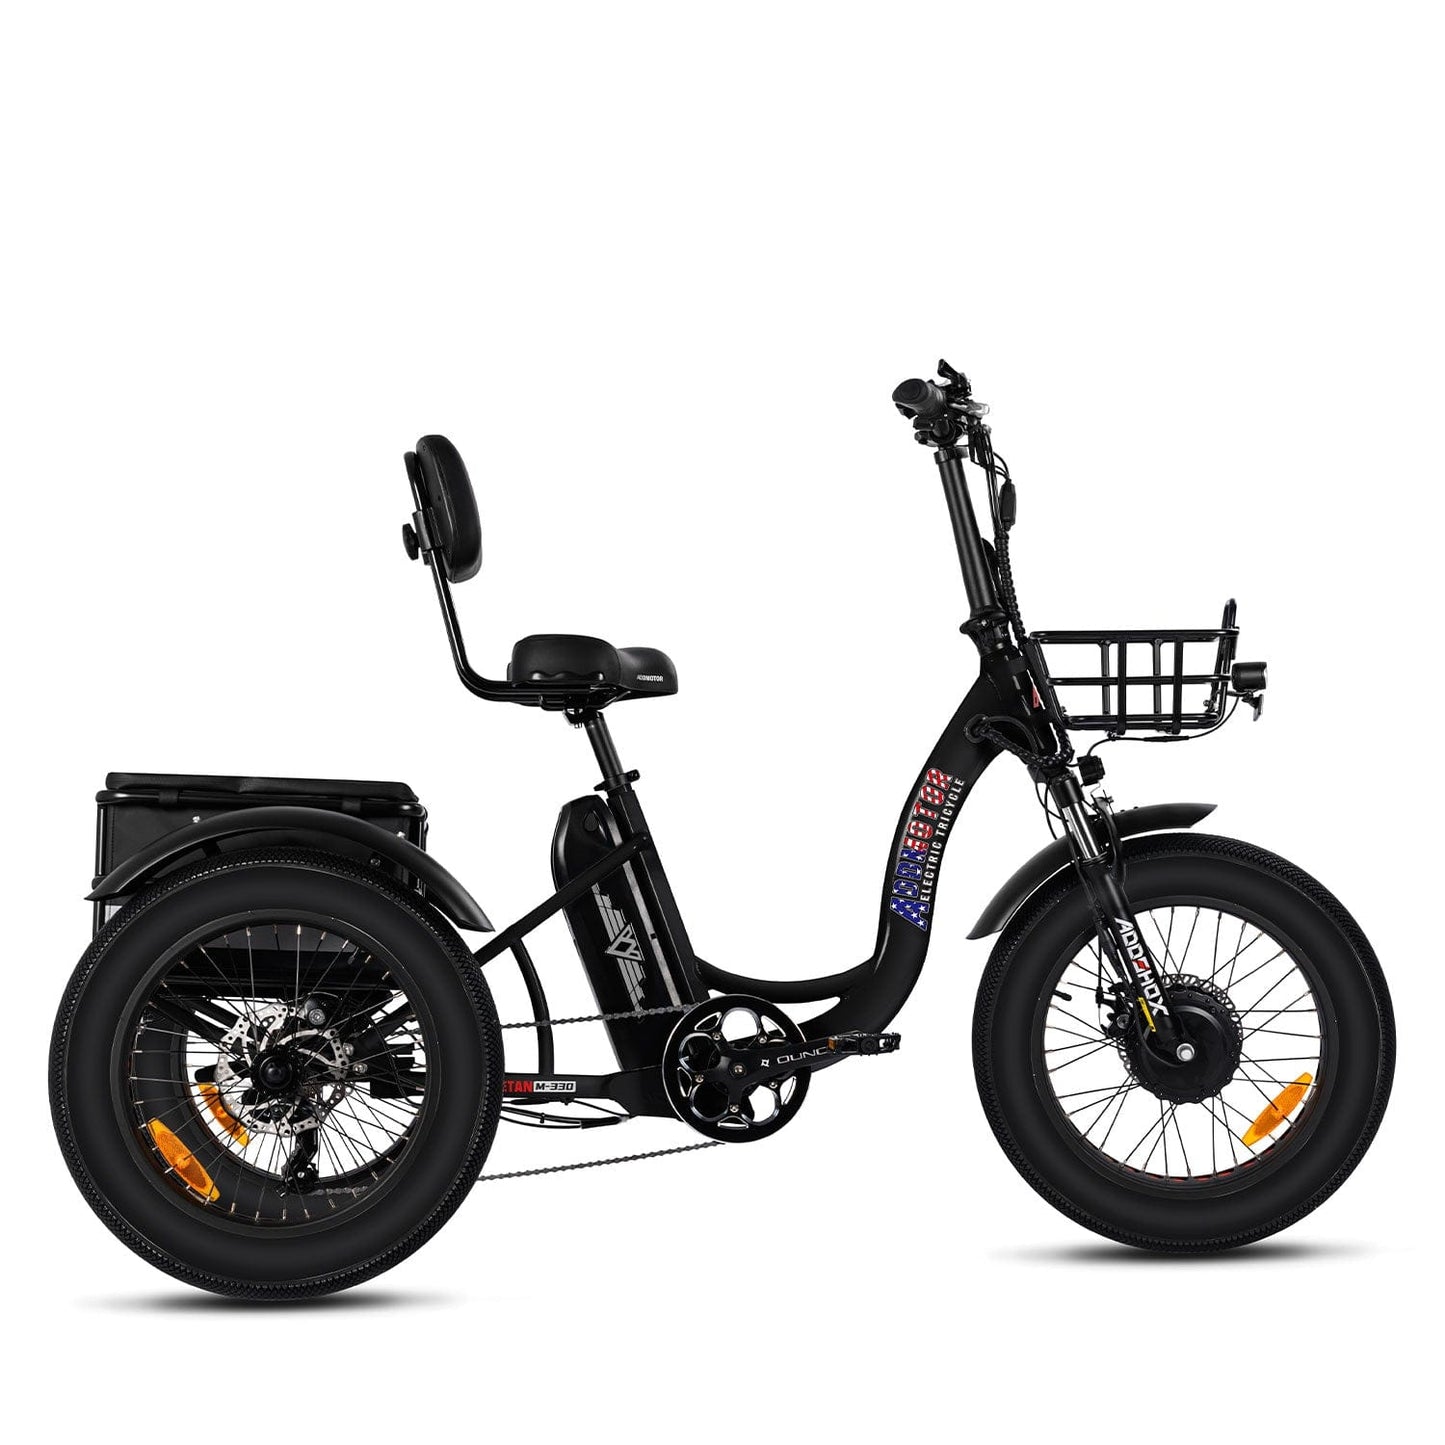 Triketan M-330 Electric Tricycle | $262 FREE GIFTS